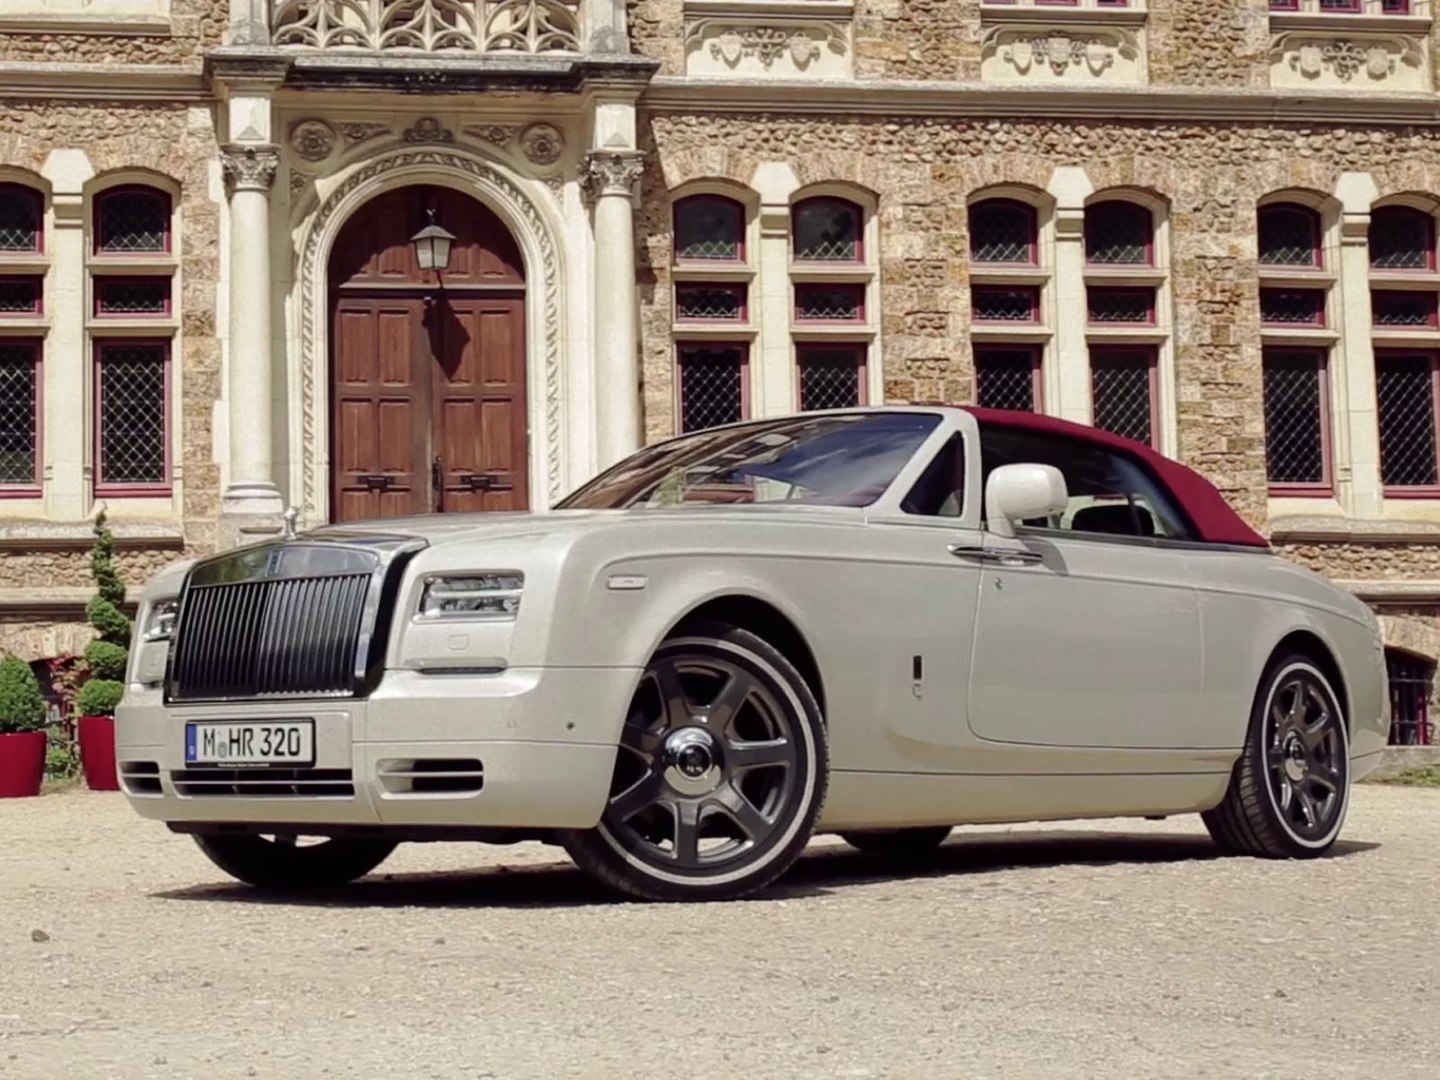 Essai Rolls Royce Phantom Drophead Coupé - Vidéo Dailymotion